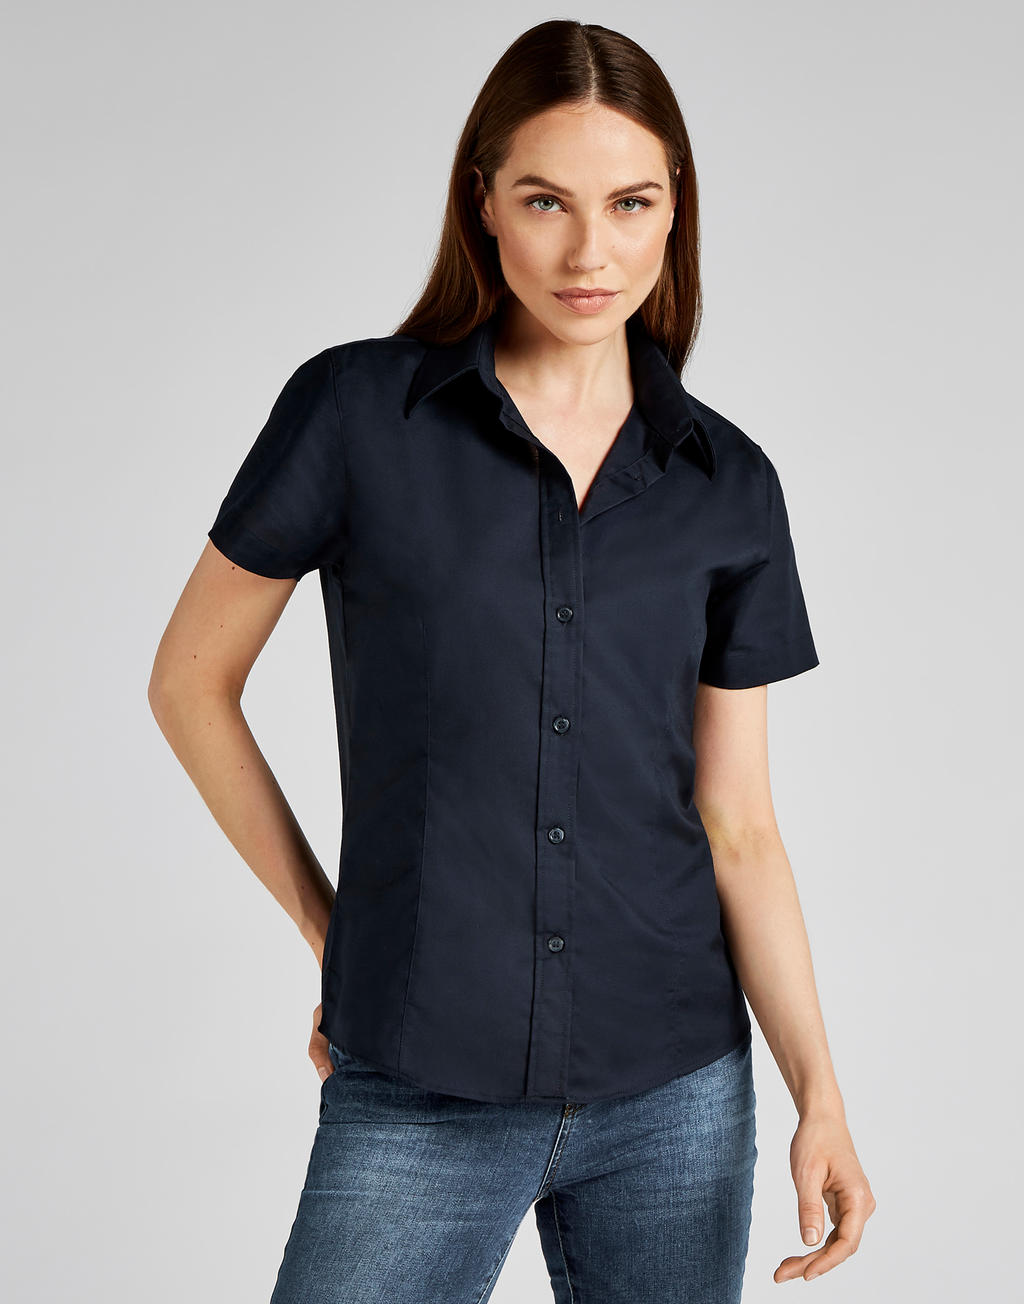 Women's Tailored Fit Workwear Oxford Shirt SSL